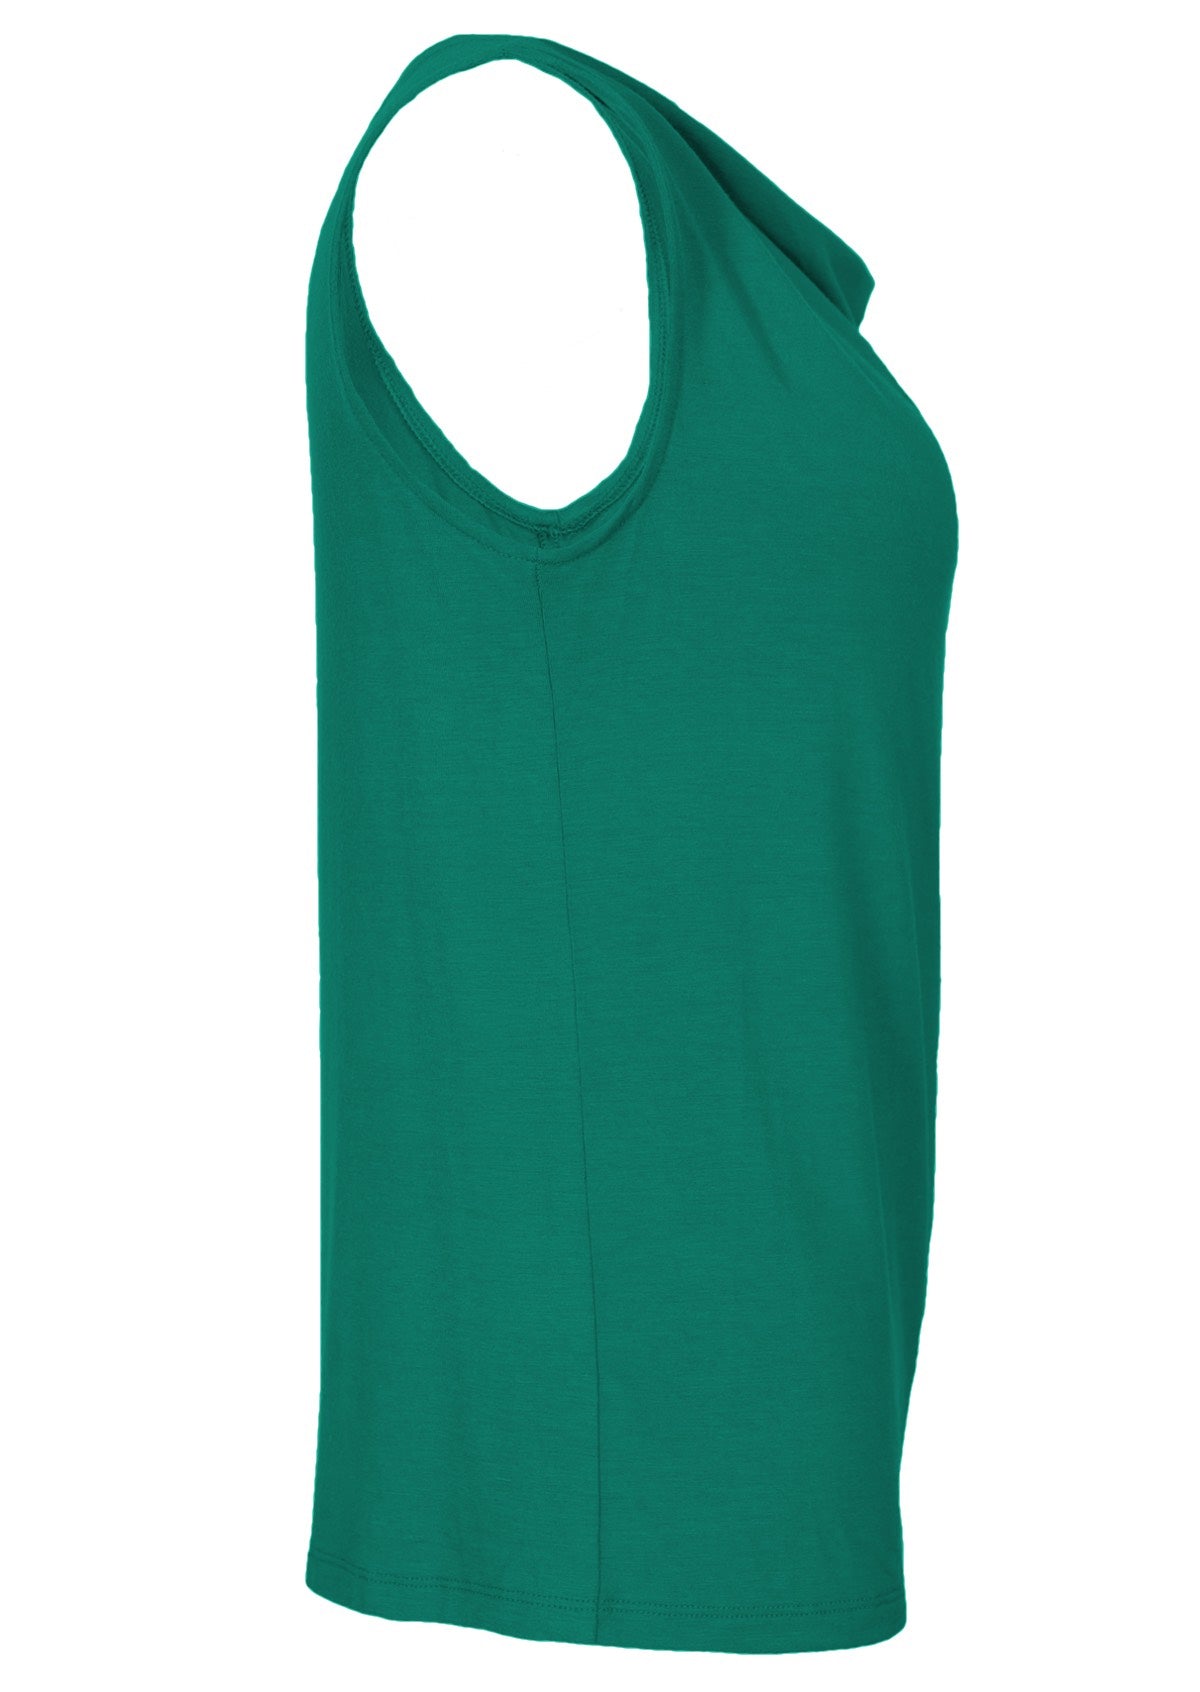 Side view sleeveless green women's rayon basic top